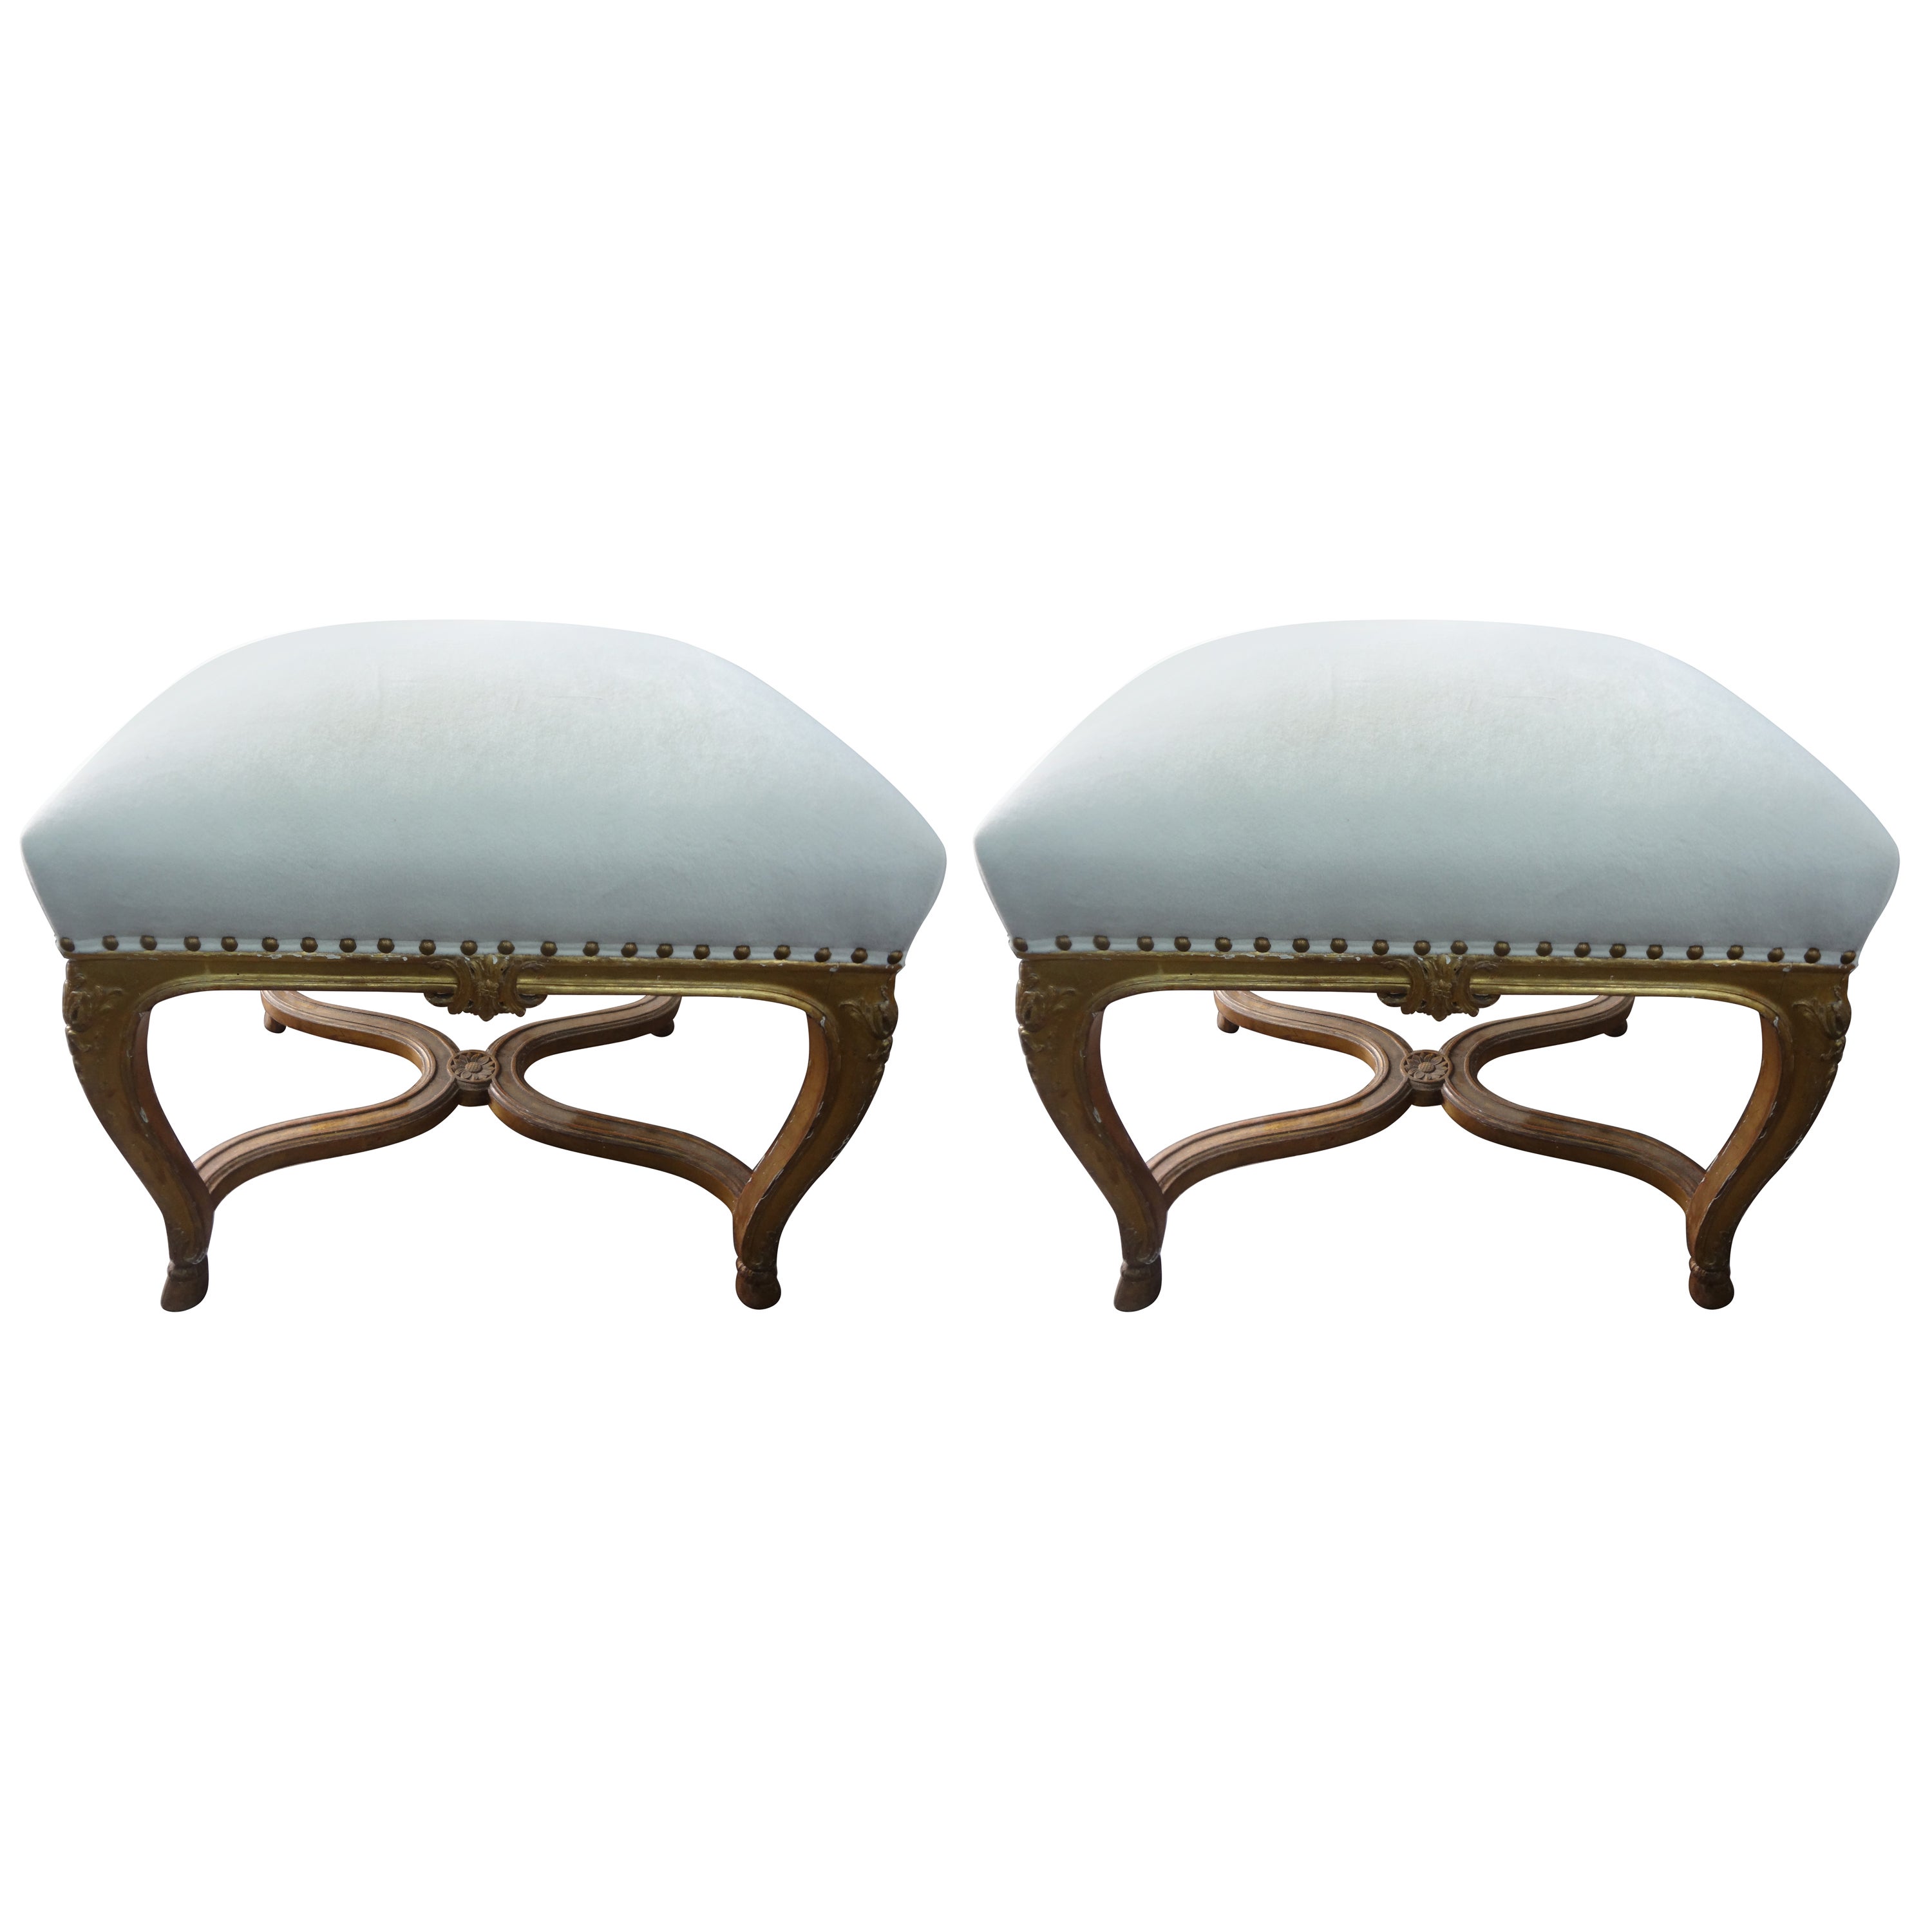 Pair of 19th Century Italian Louis xvi Style Giltwood Benches